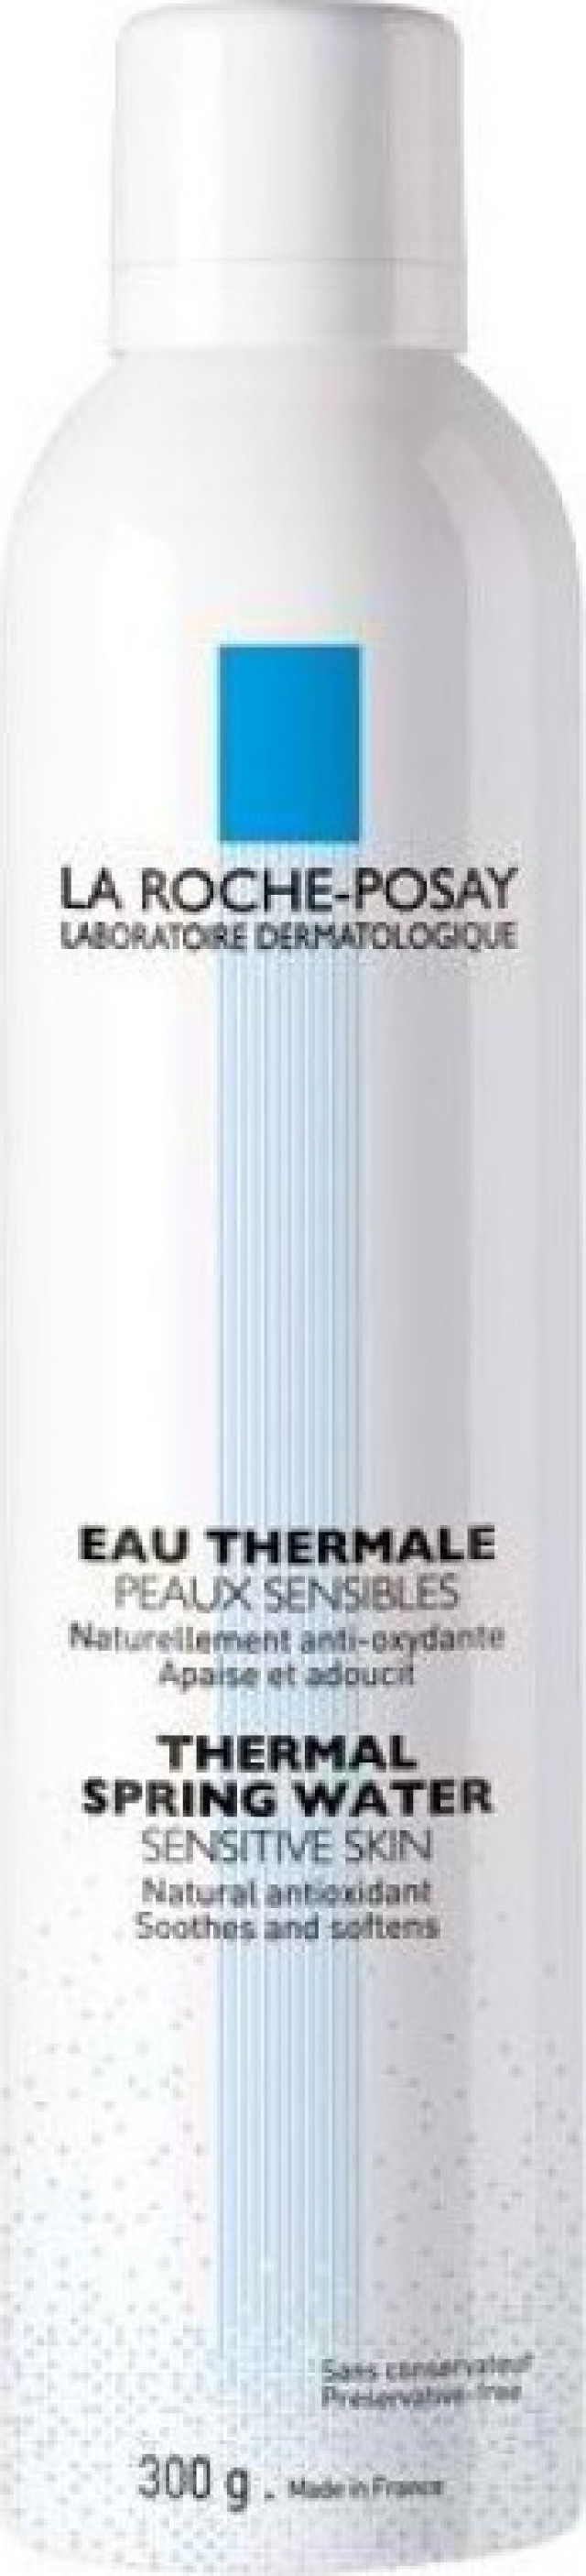 LA ROCHE POSAY Thermal Spring Water Sensitive Skin, Ιαματικό Νερό με καταπραϋντική, επουλωτική & αντιοξειδωτική δράση 300ml